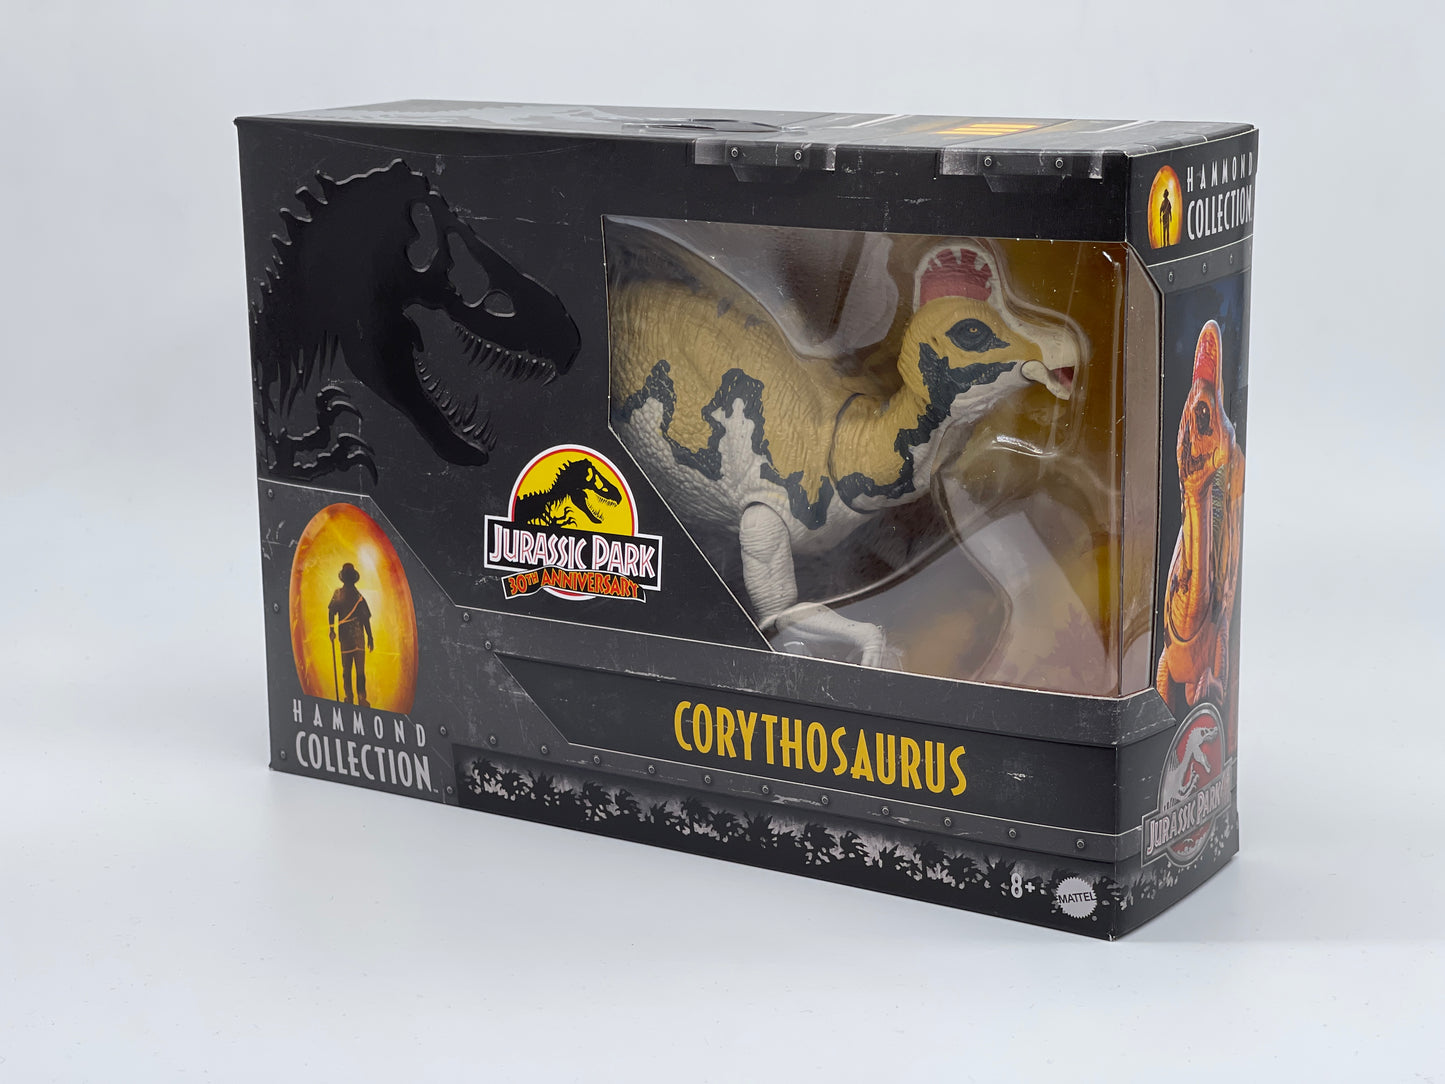 Jurassic Park Hammond Collection "Corythosaurus" 30th Anniversary (2023)